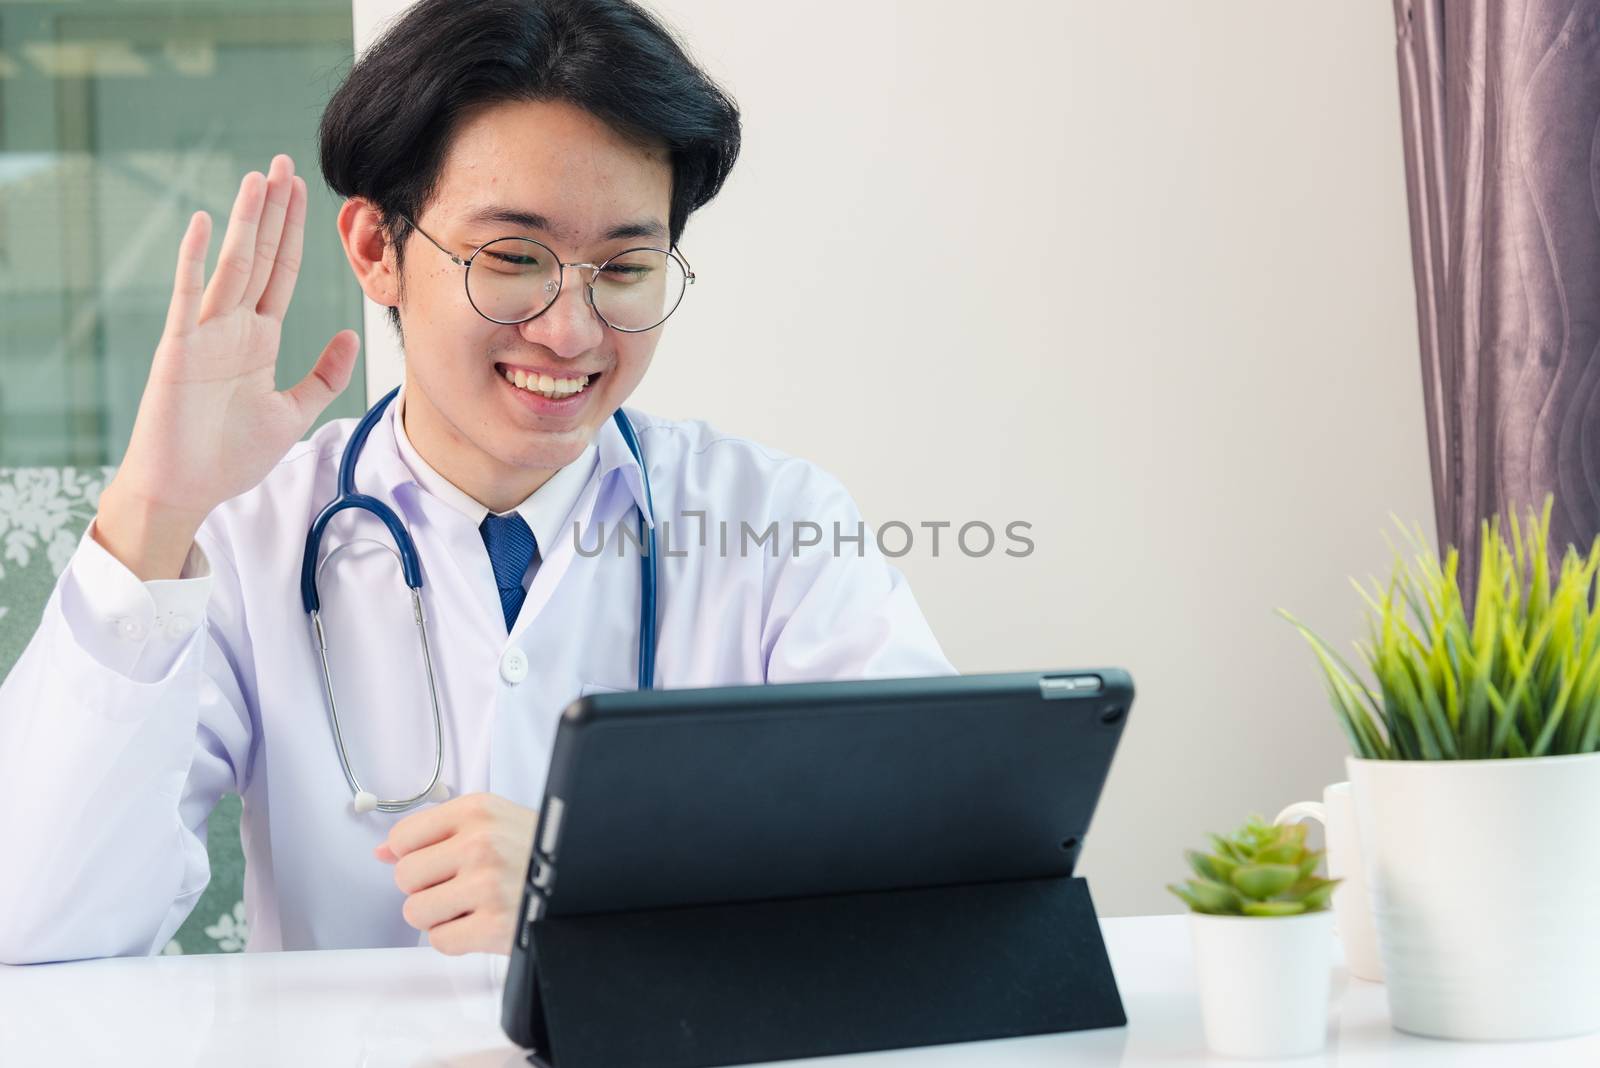 Doctor man smile raise hands to greet patients modern smart digi by Sorapop